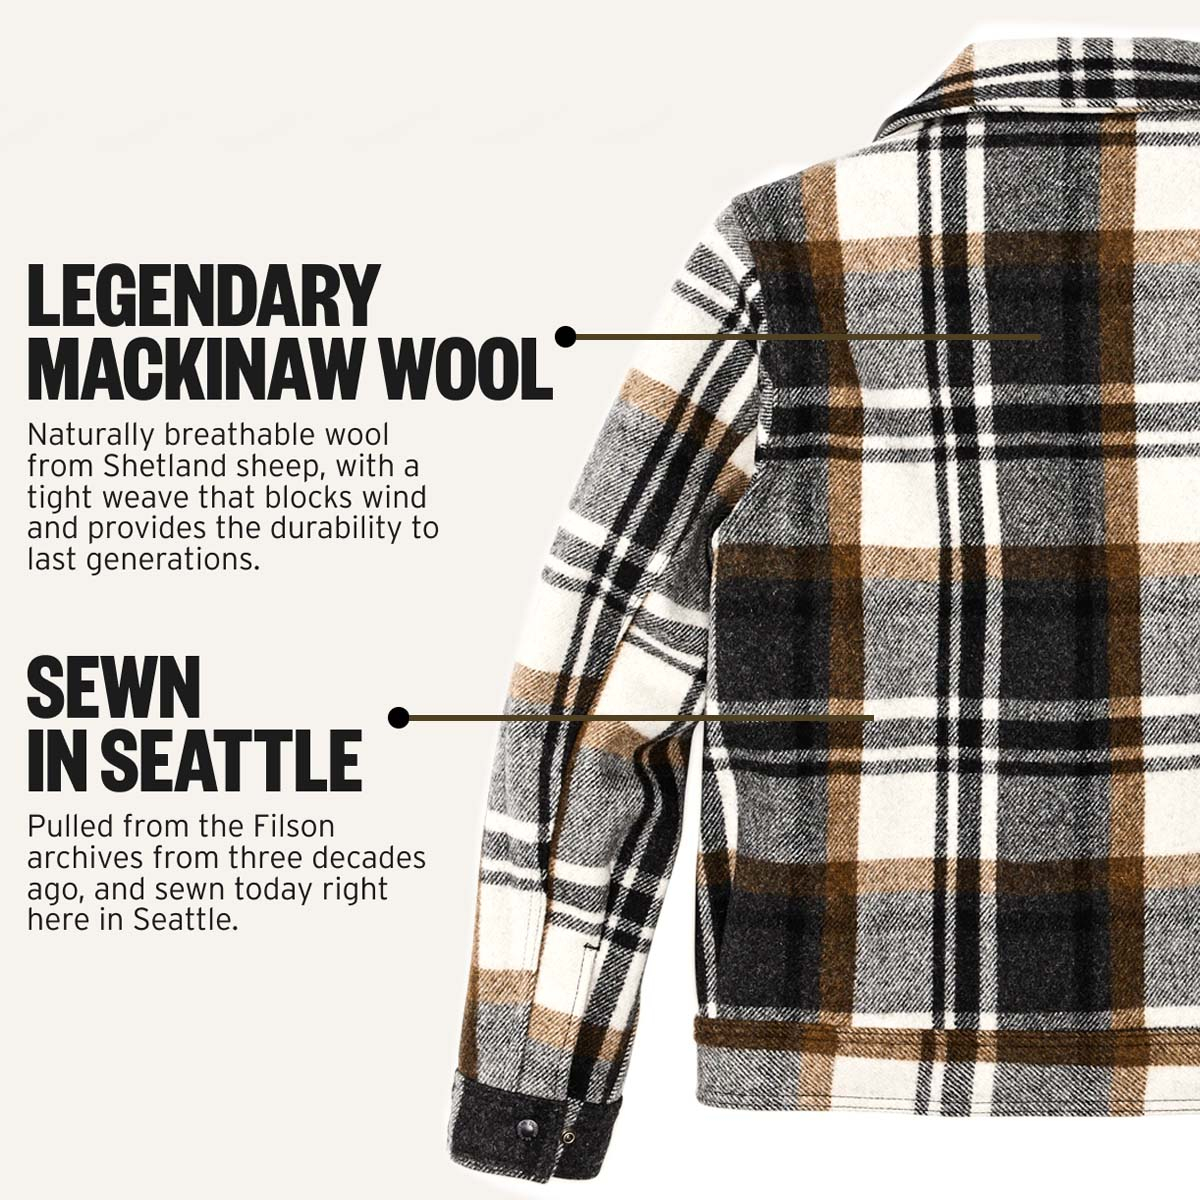 Filson Mackinaw Wool Work Jacket Blue Coal/Copper Heather, Legendary Mackinaw Wool and Sewn in Seattle